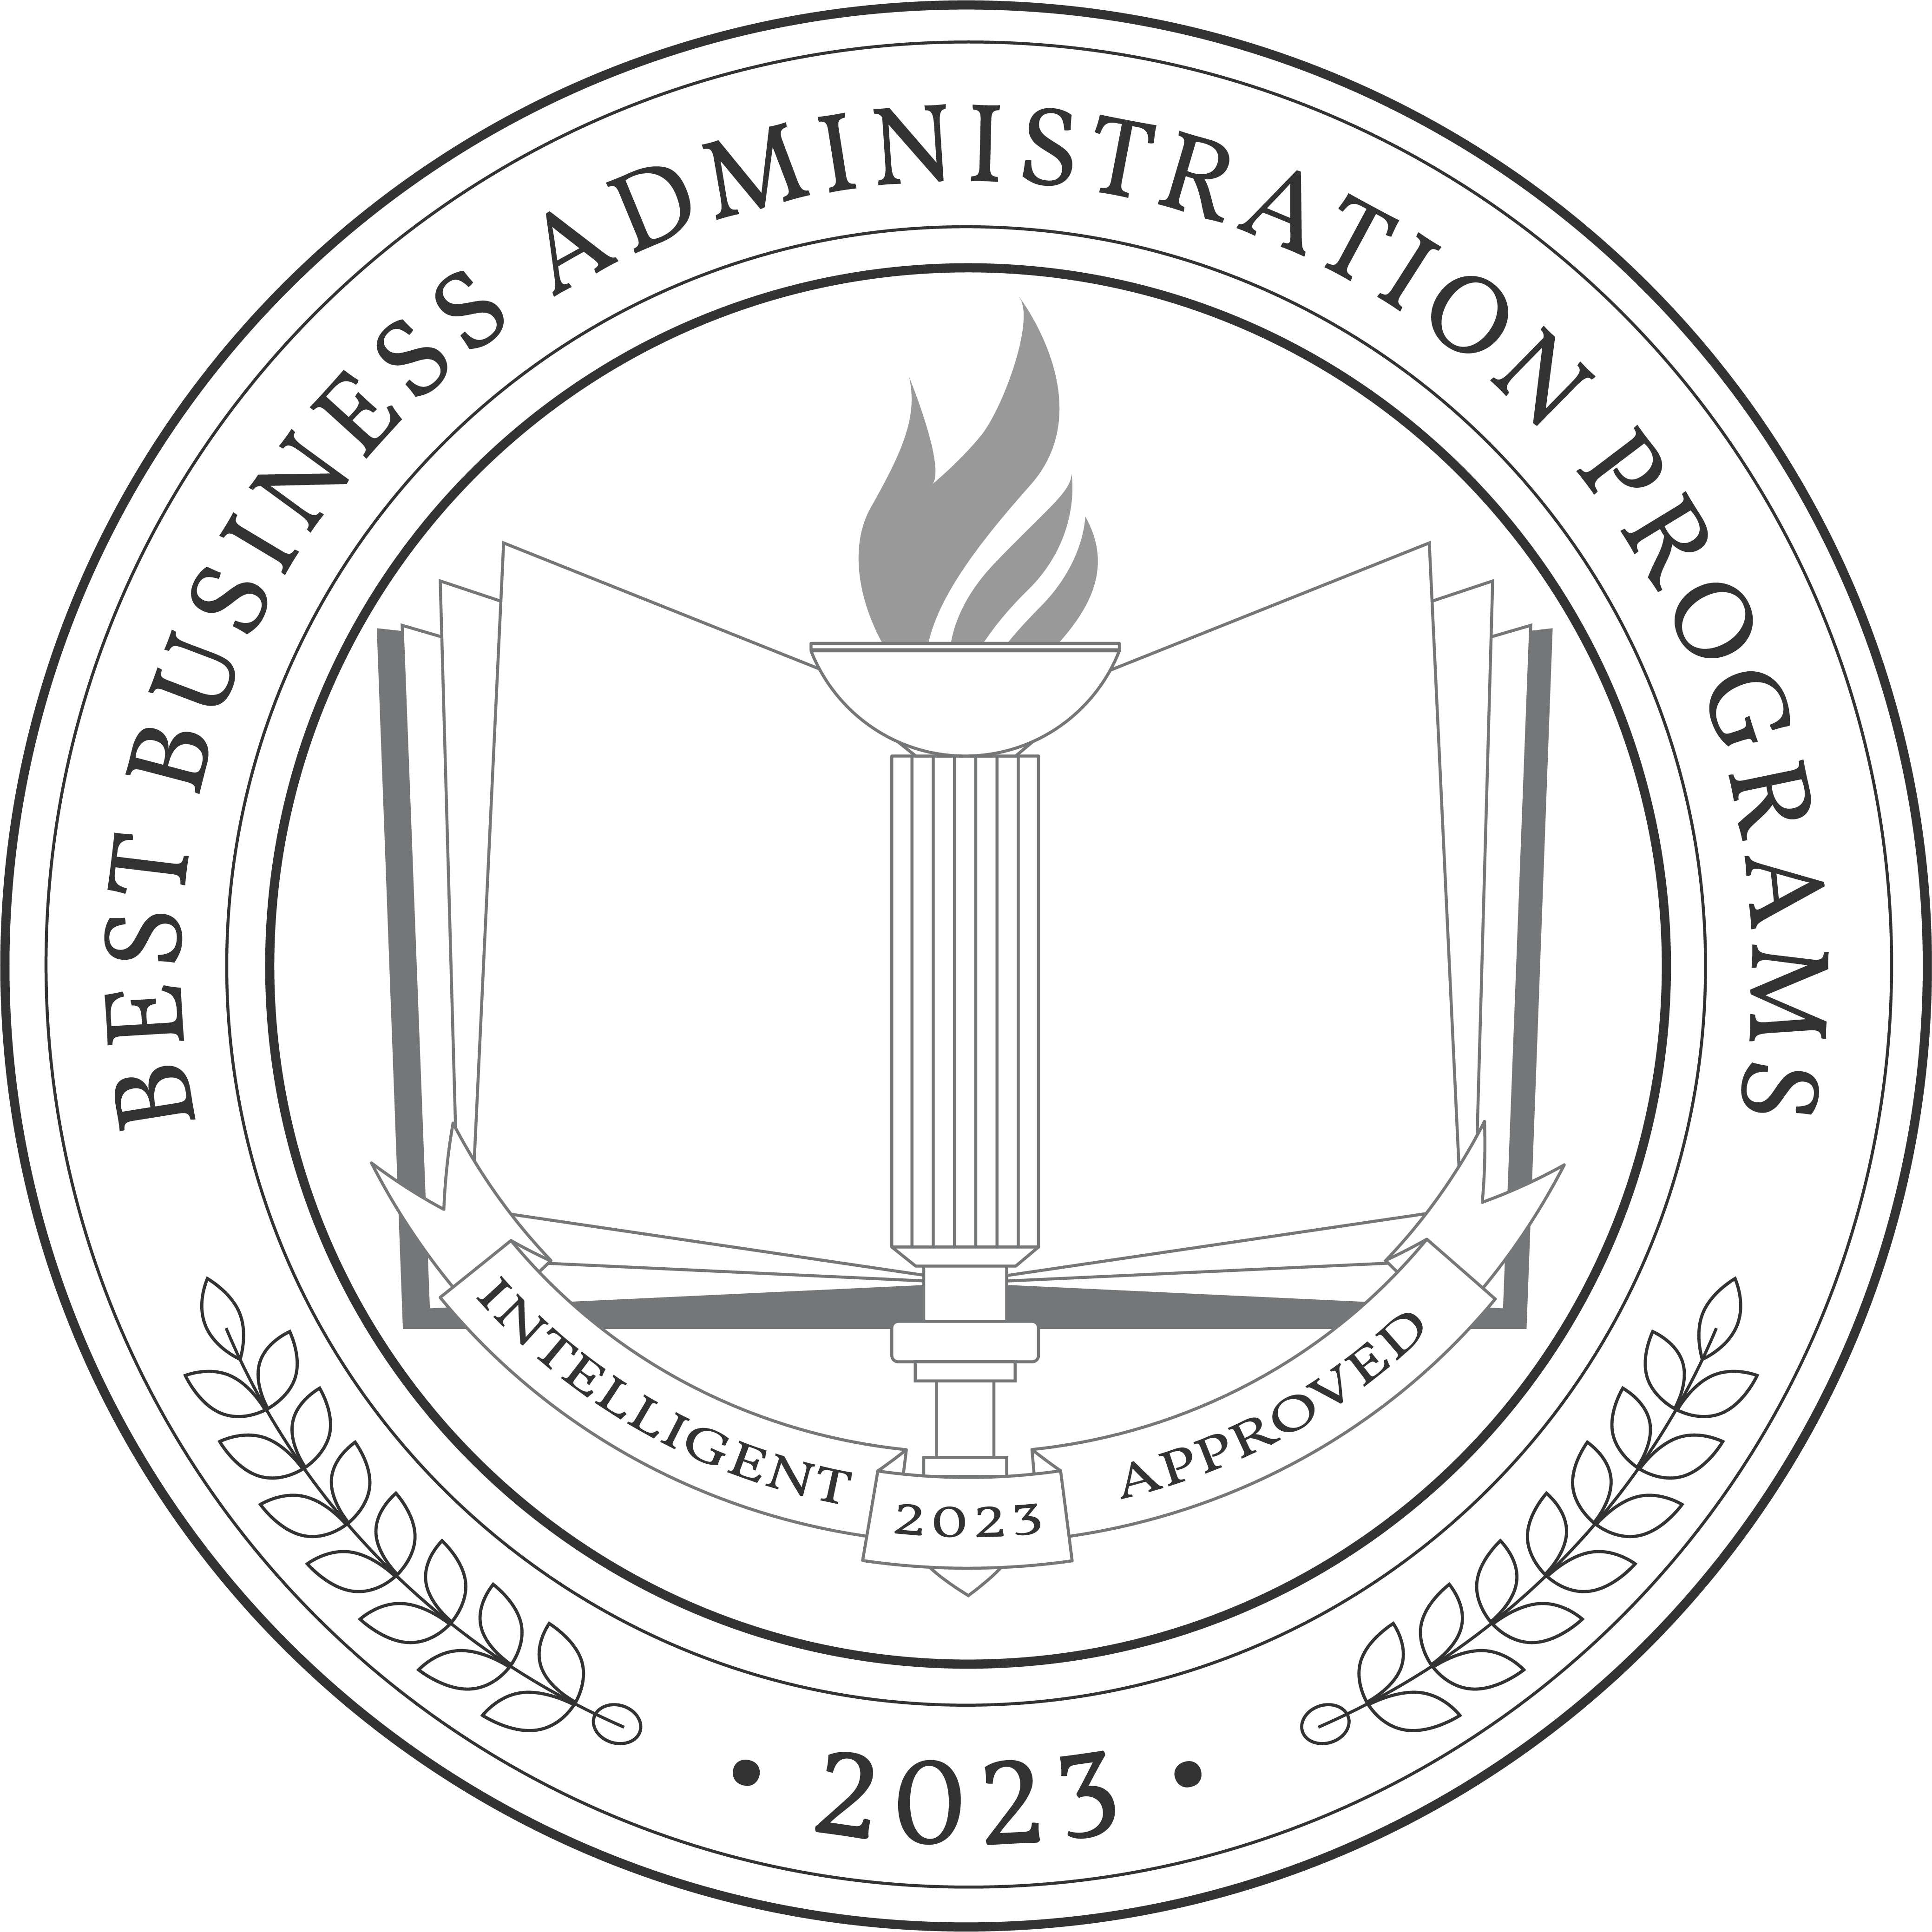 Best Business Administration Programs badge